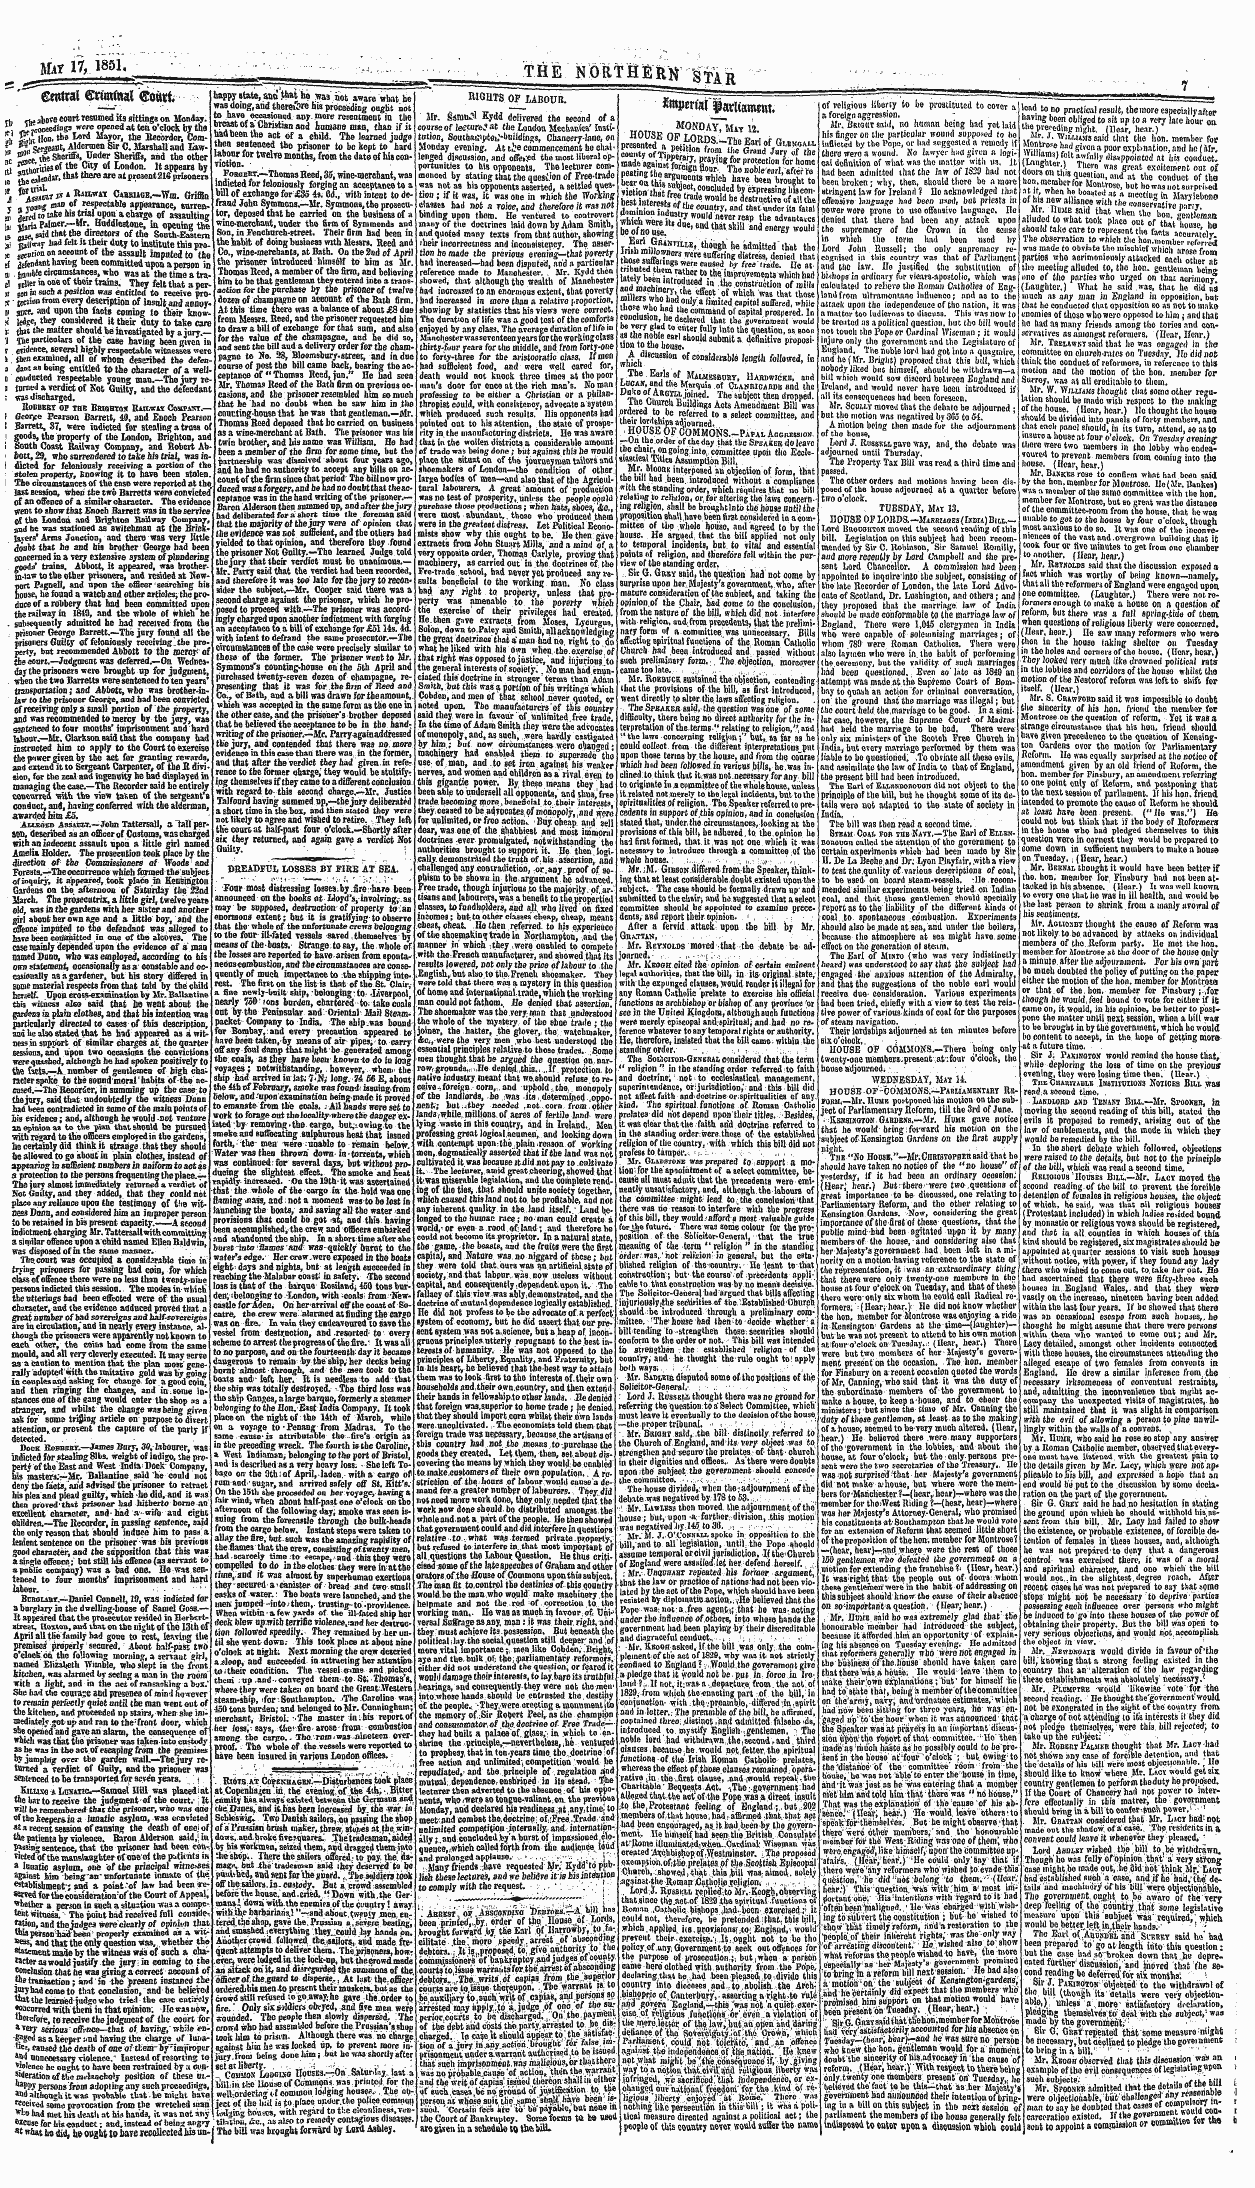 Northern Star (1837-1852): jS F Y, 2nd edition - Central Ettimfoal ©Ofafc „ .„» &Gt;,»„- _. « ^ . .